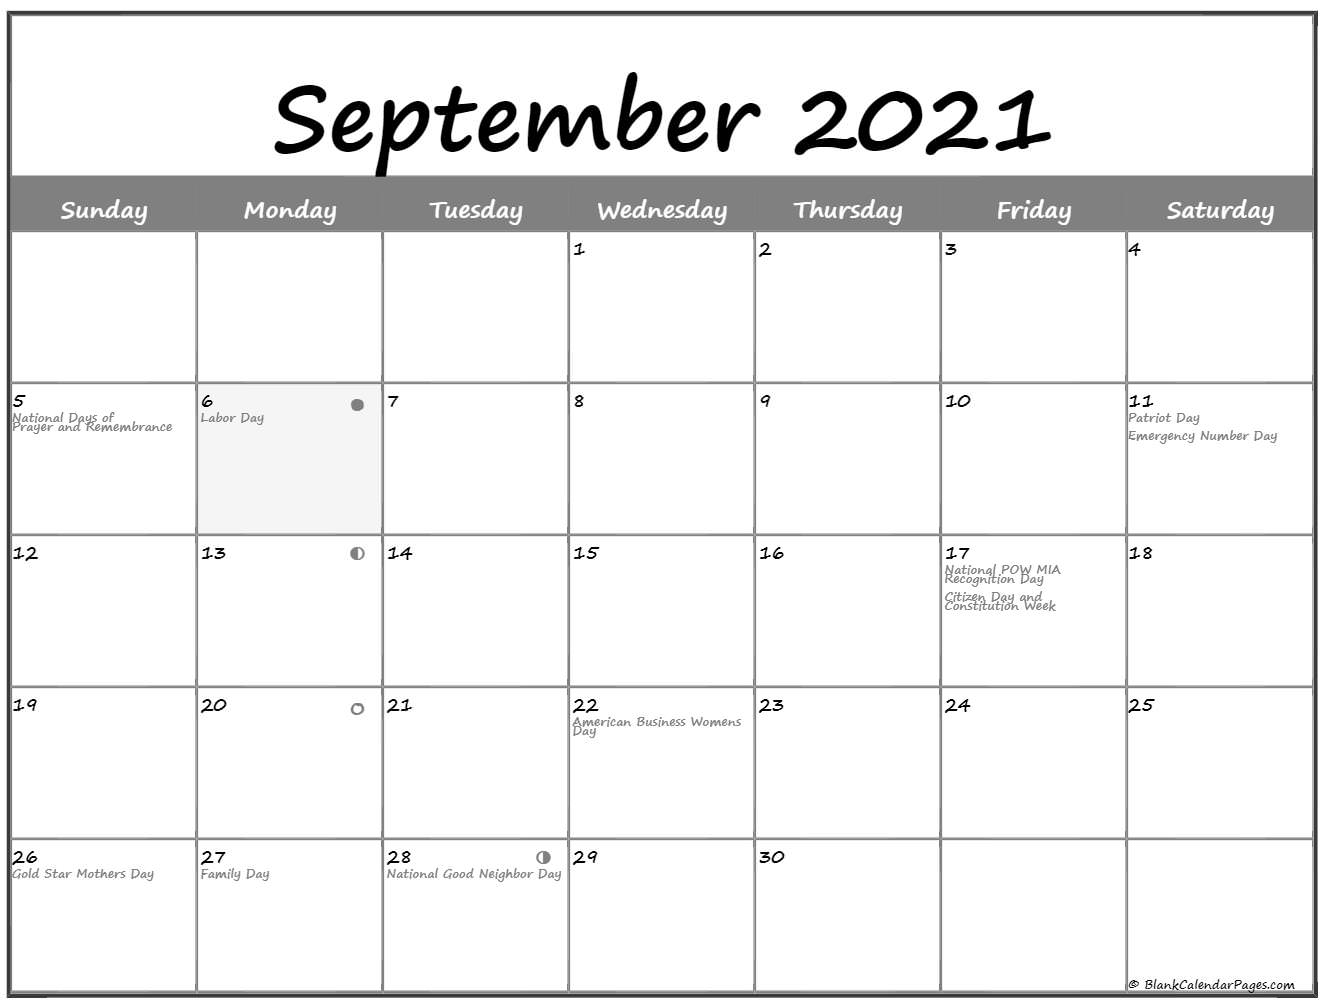 September 2021 Lunar Calendar | Moon Phase Calendar